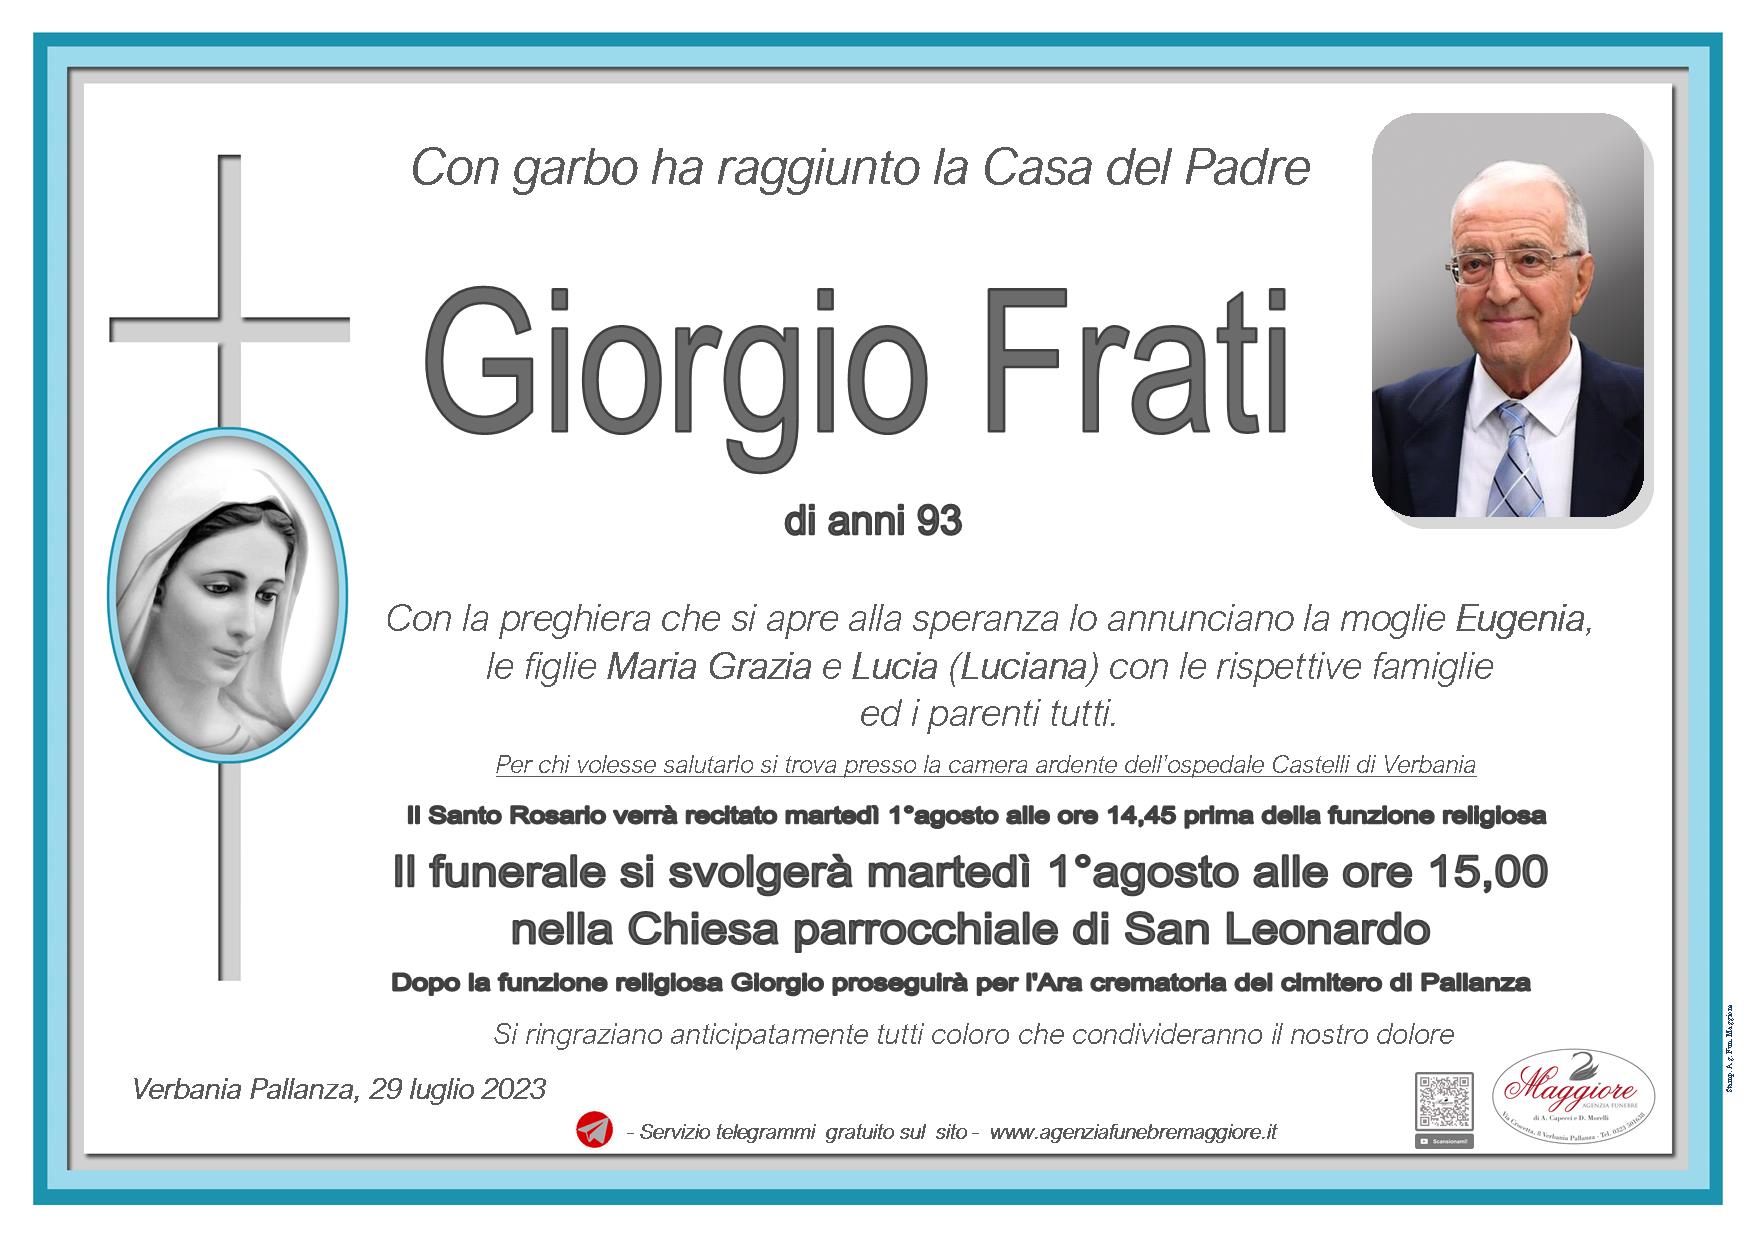 Giorgio Frati